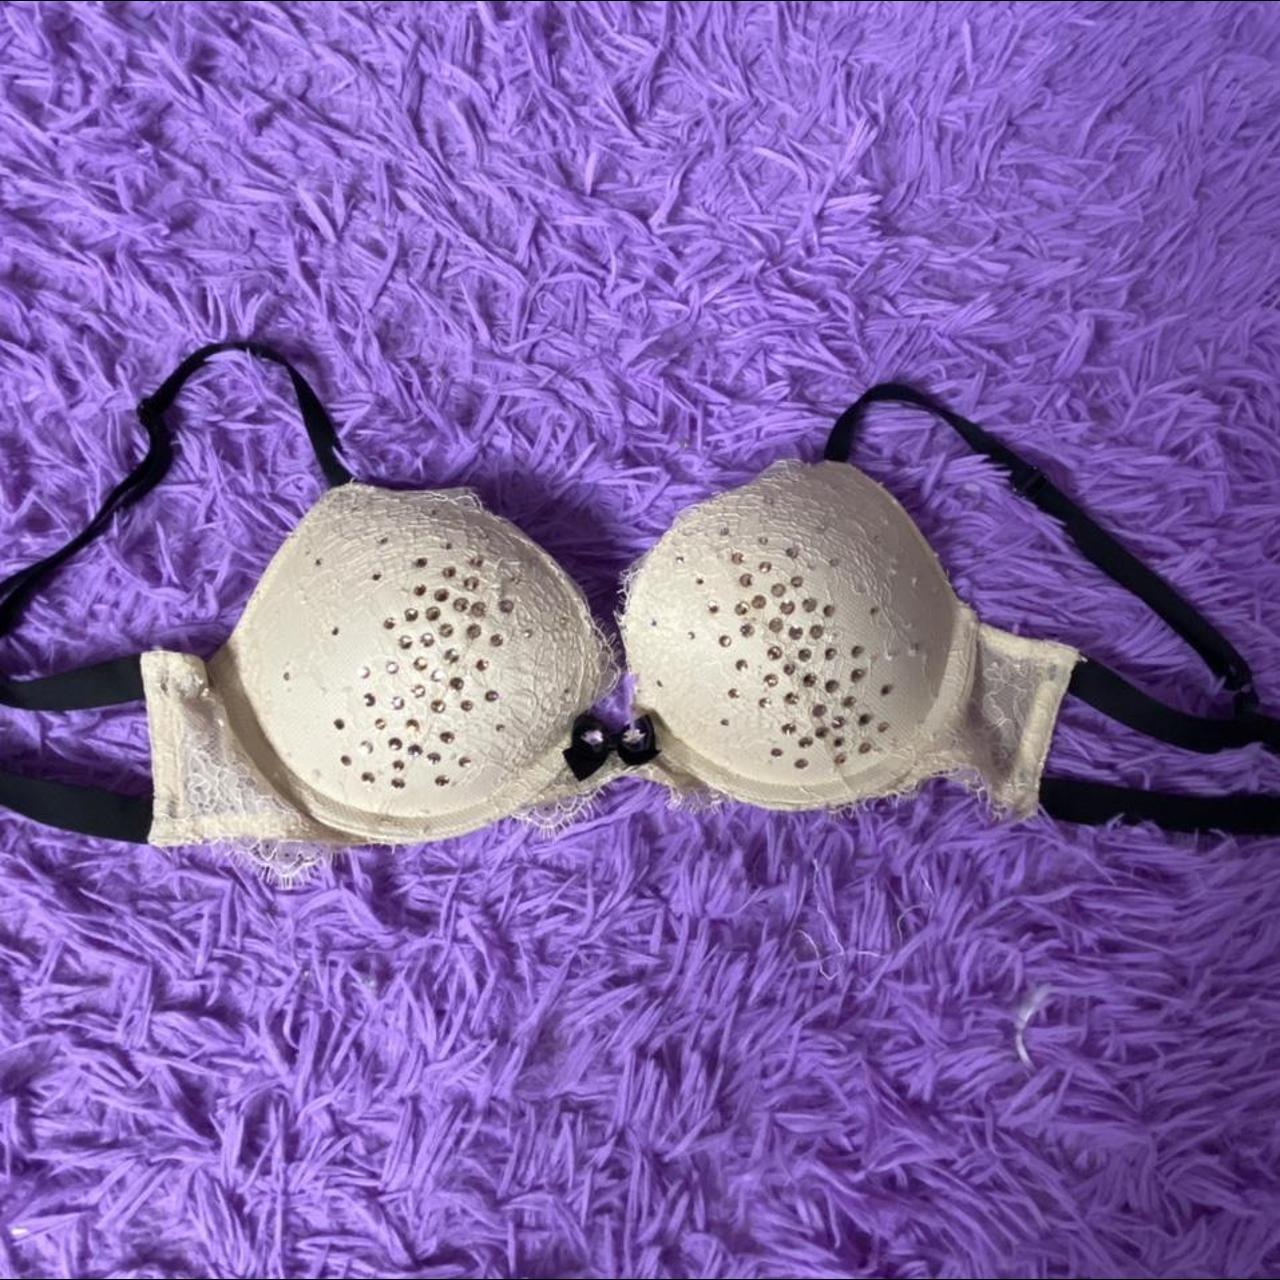 Cute Victoria secrets push up bra 32b #lingerie - Depop